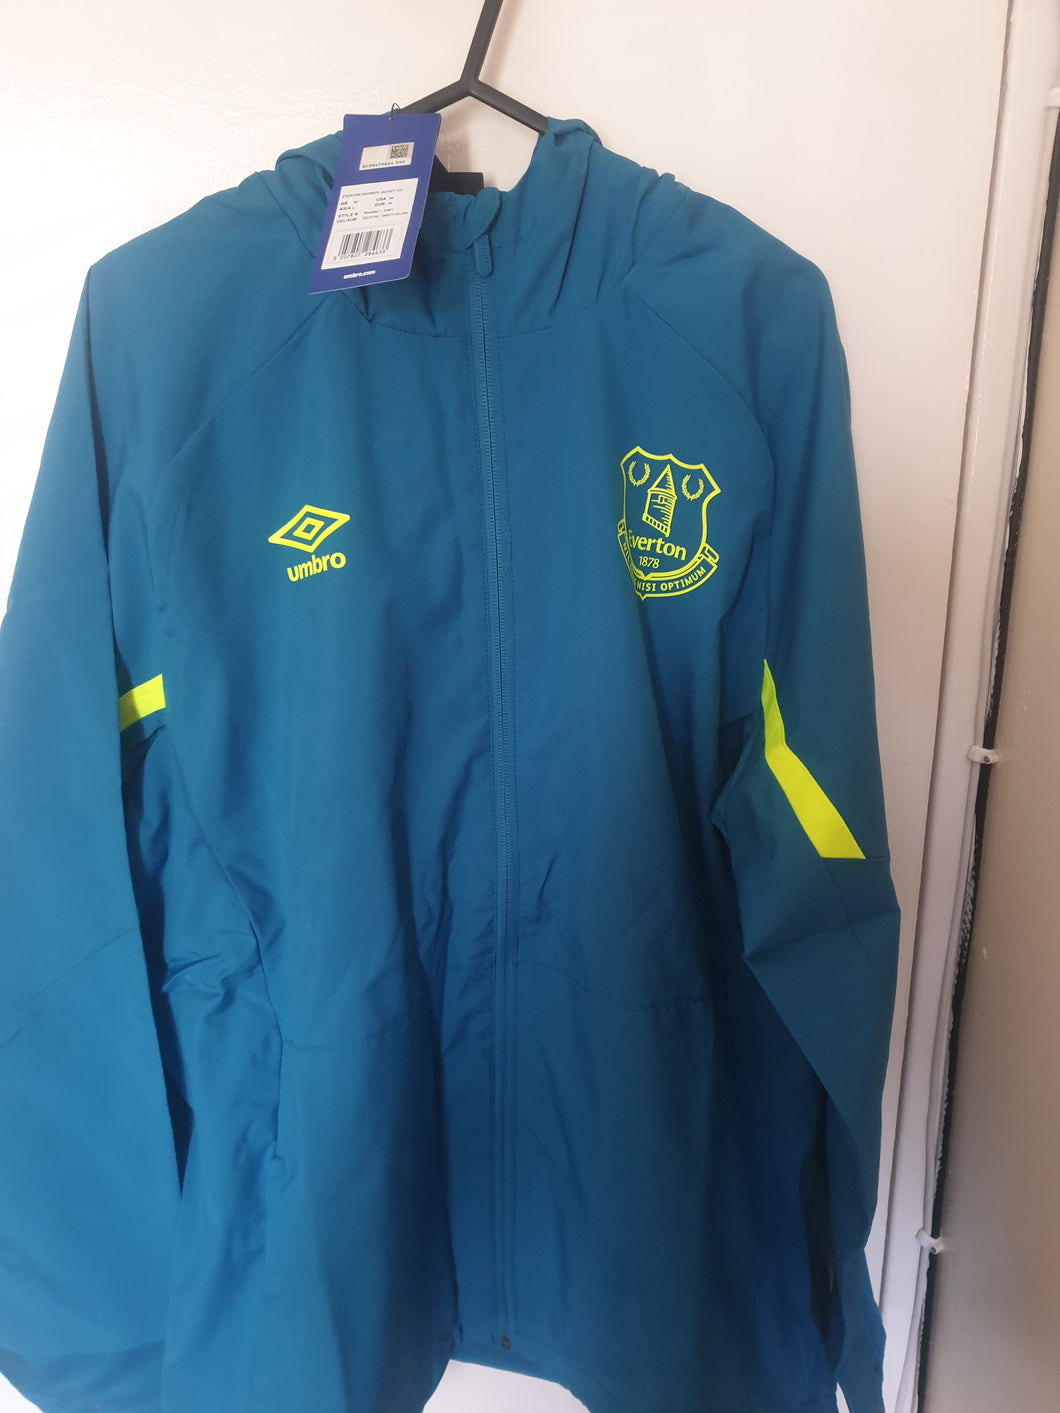 BNWT Everton Fc Windbreaker Hooded Rain Football Jacket (Size Medium)